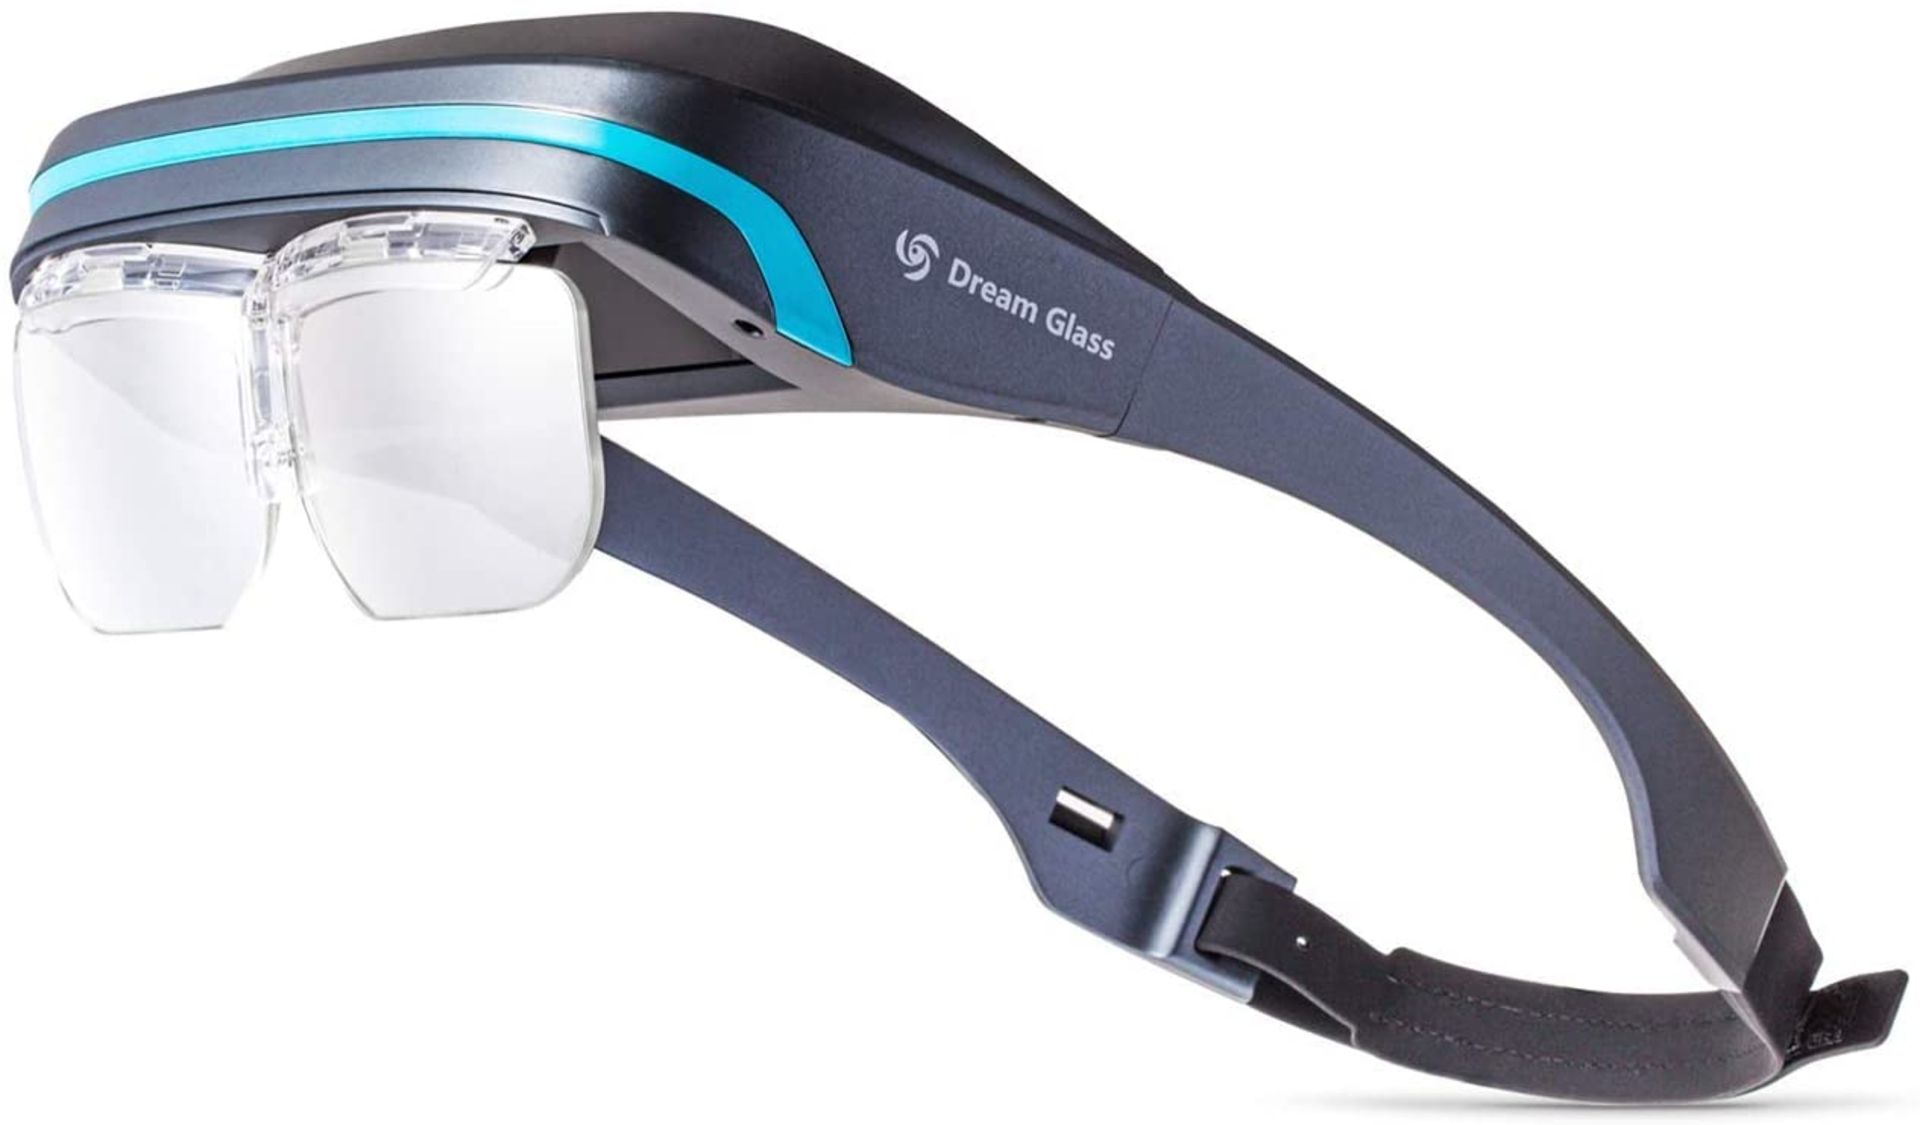 1 x Dream Glass 4k Portable And Private AR Smart Glasses - Original RRP £588.00 - CL712 - Ref: